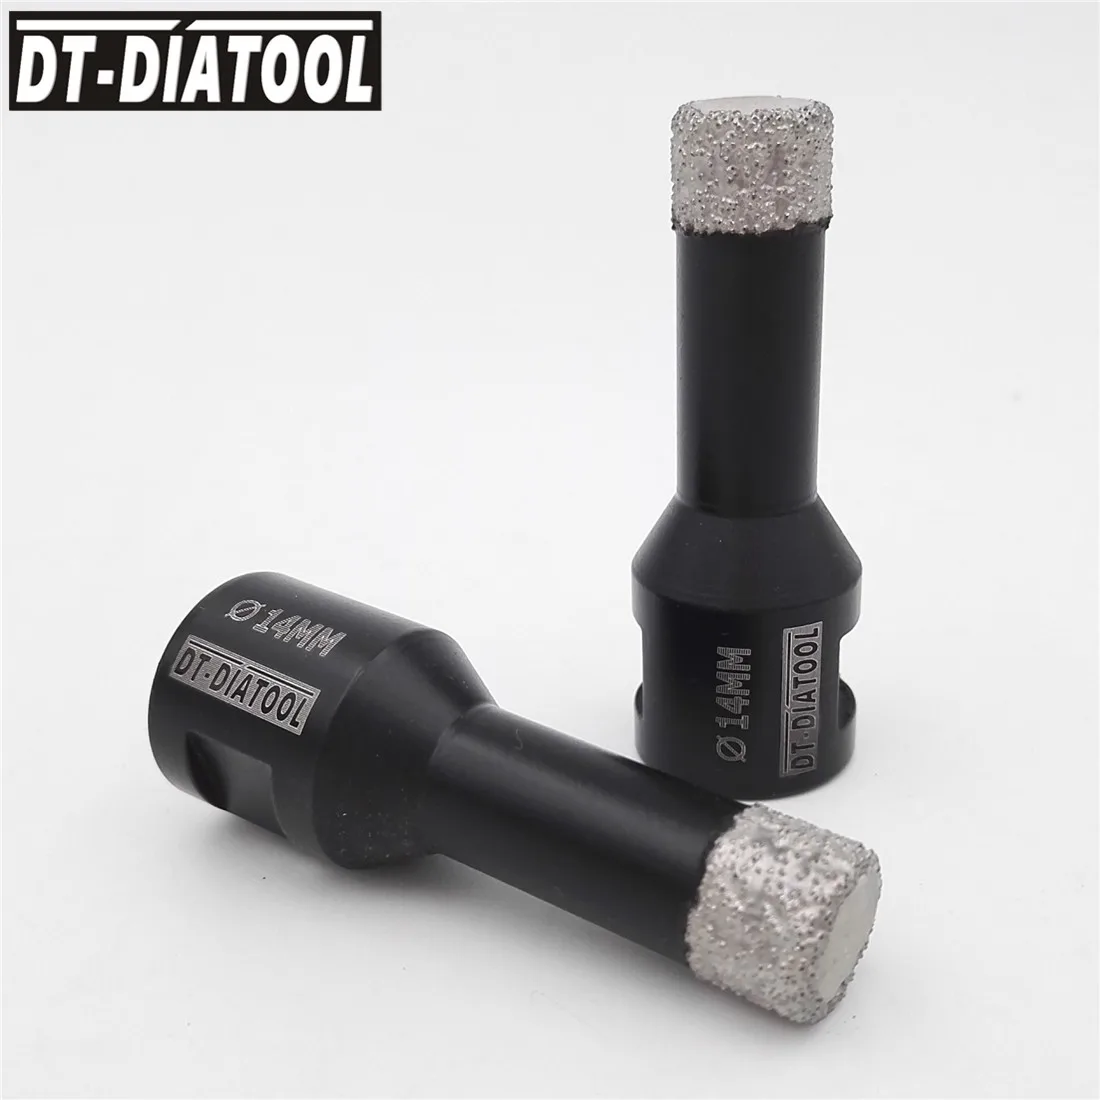 DT-DIATOOL 2pcs Dia14mm Dry Vacuum Brazed Diamond Drill Core Bits Professional Quality Drilling granite marble tile M14 Thread